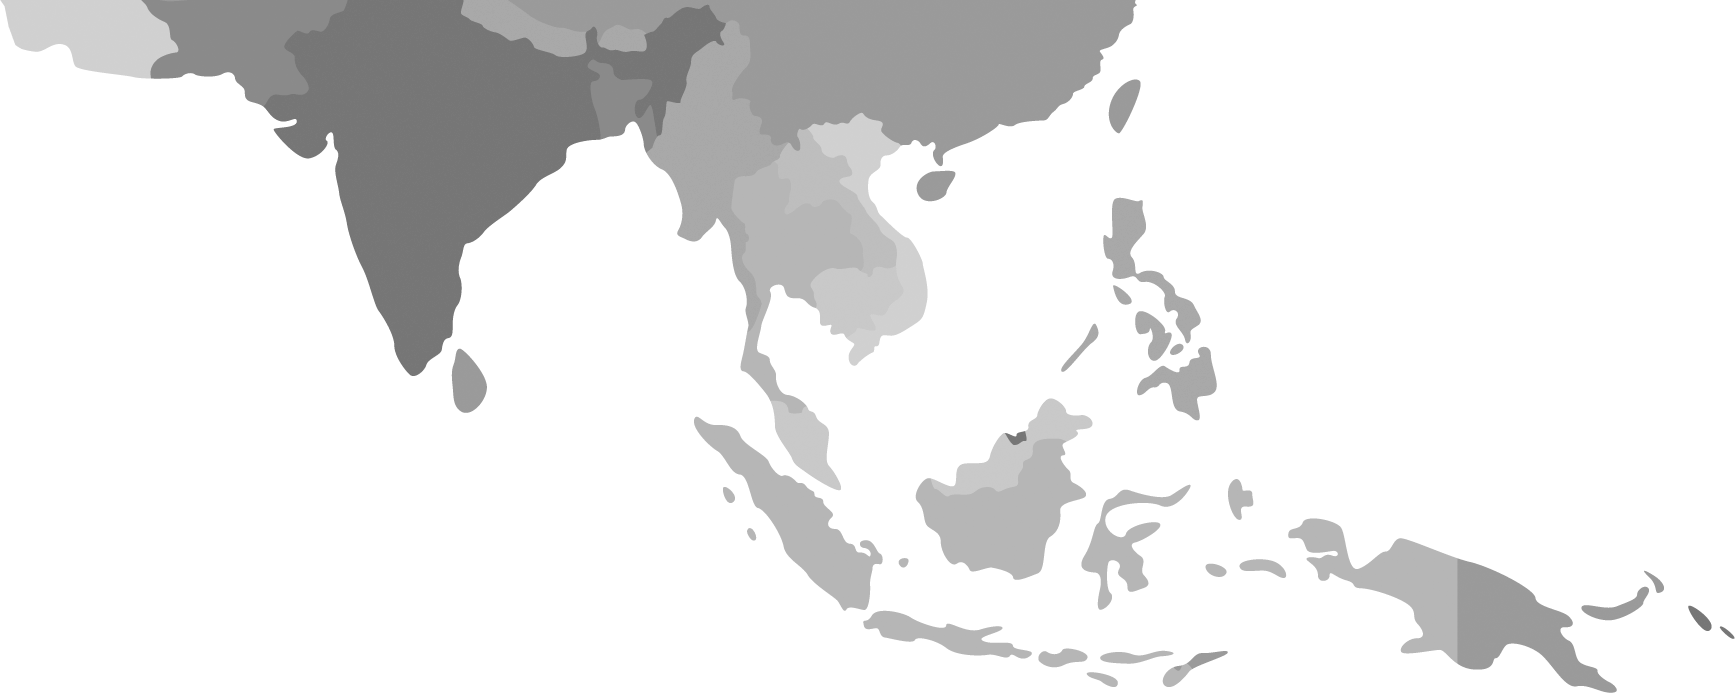 contractor in southeast asia region